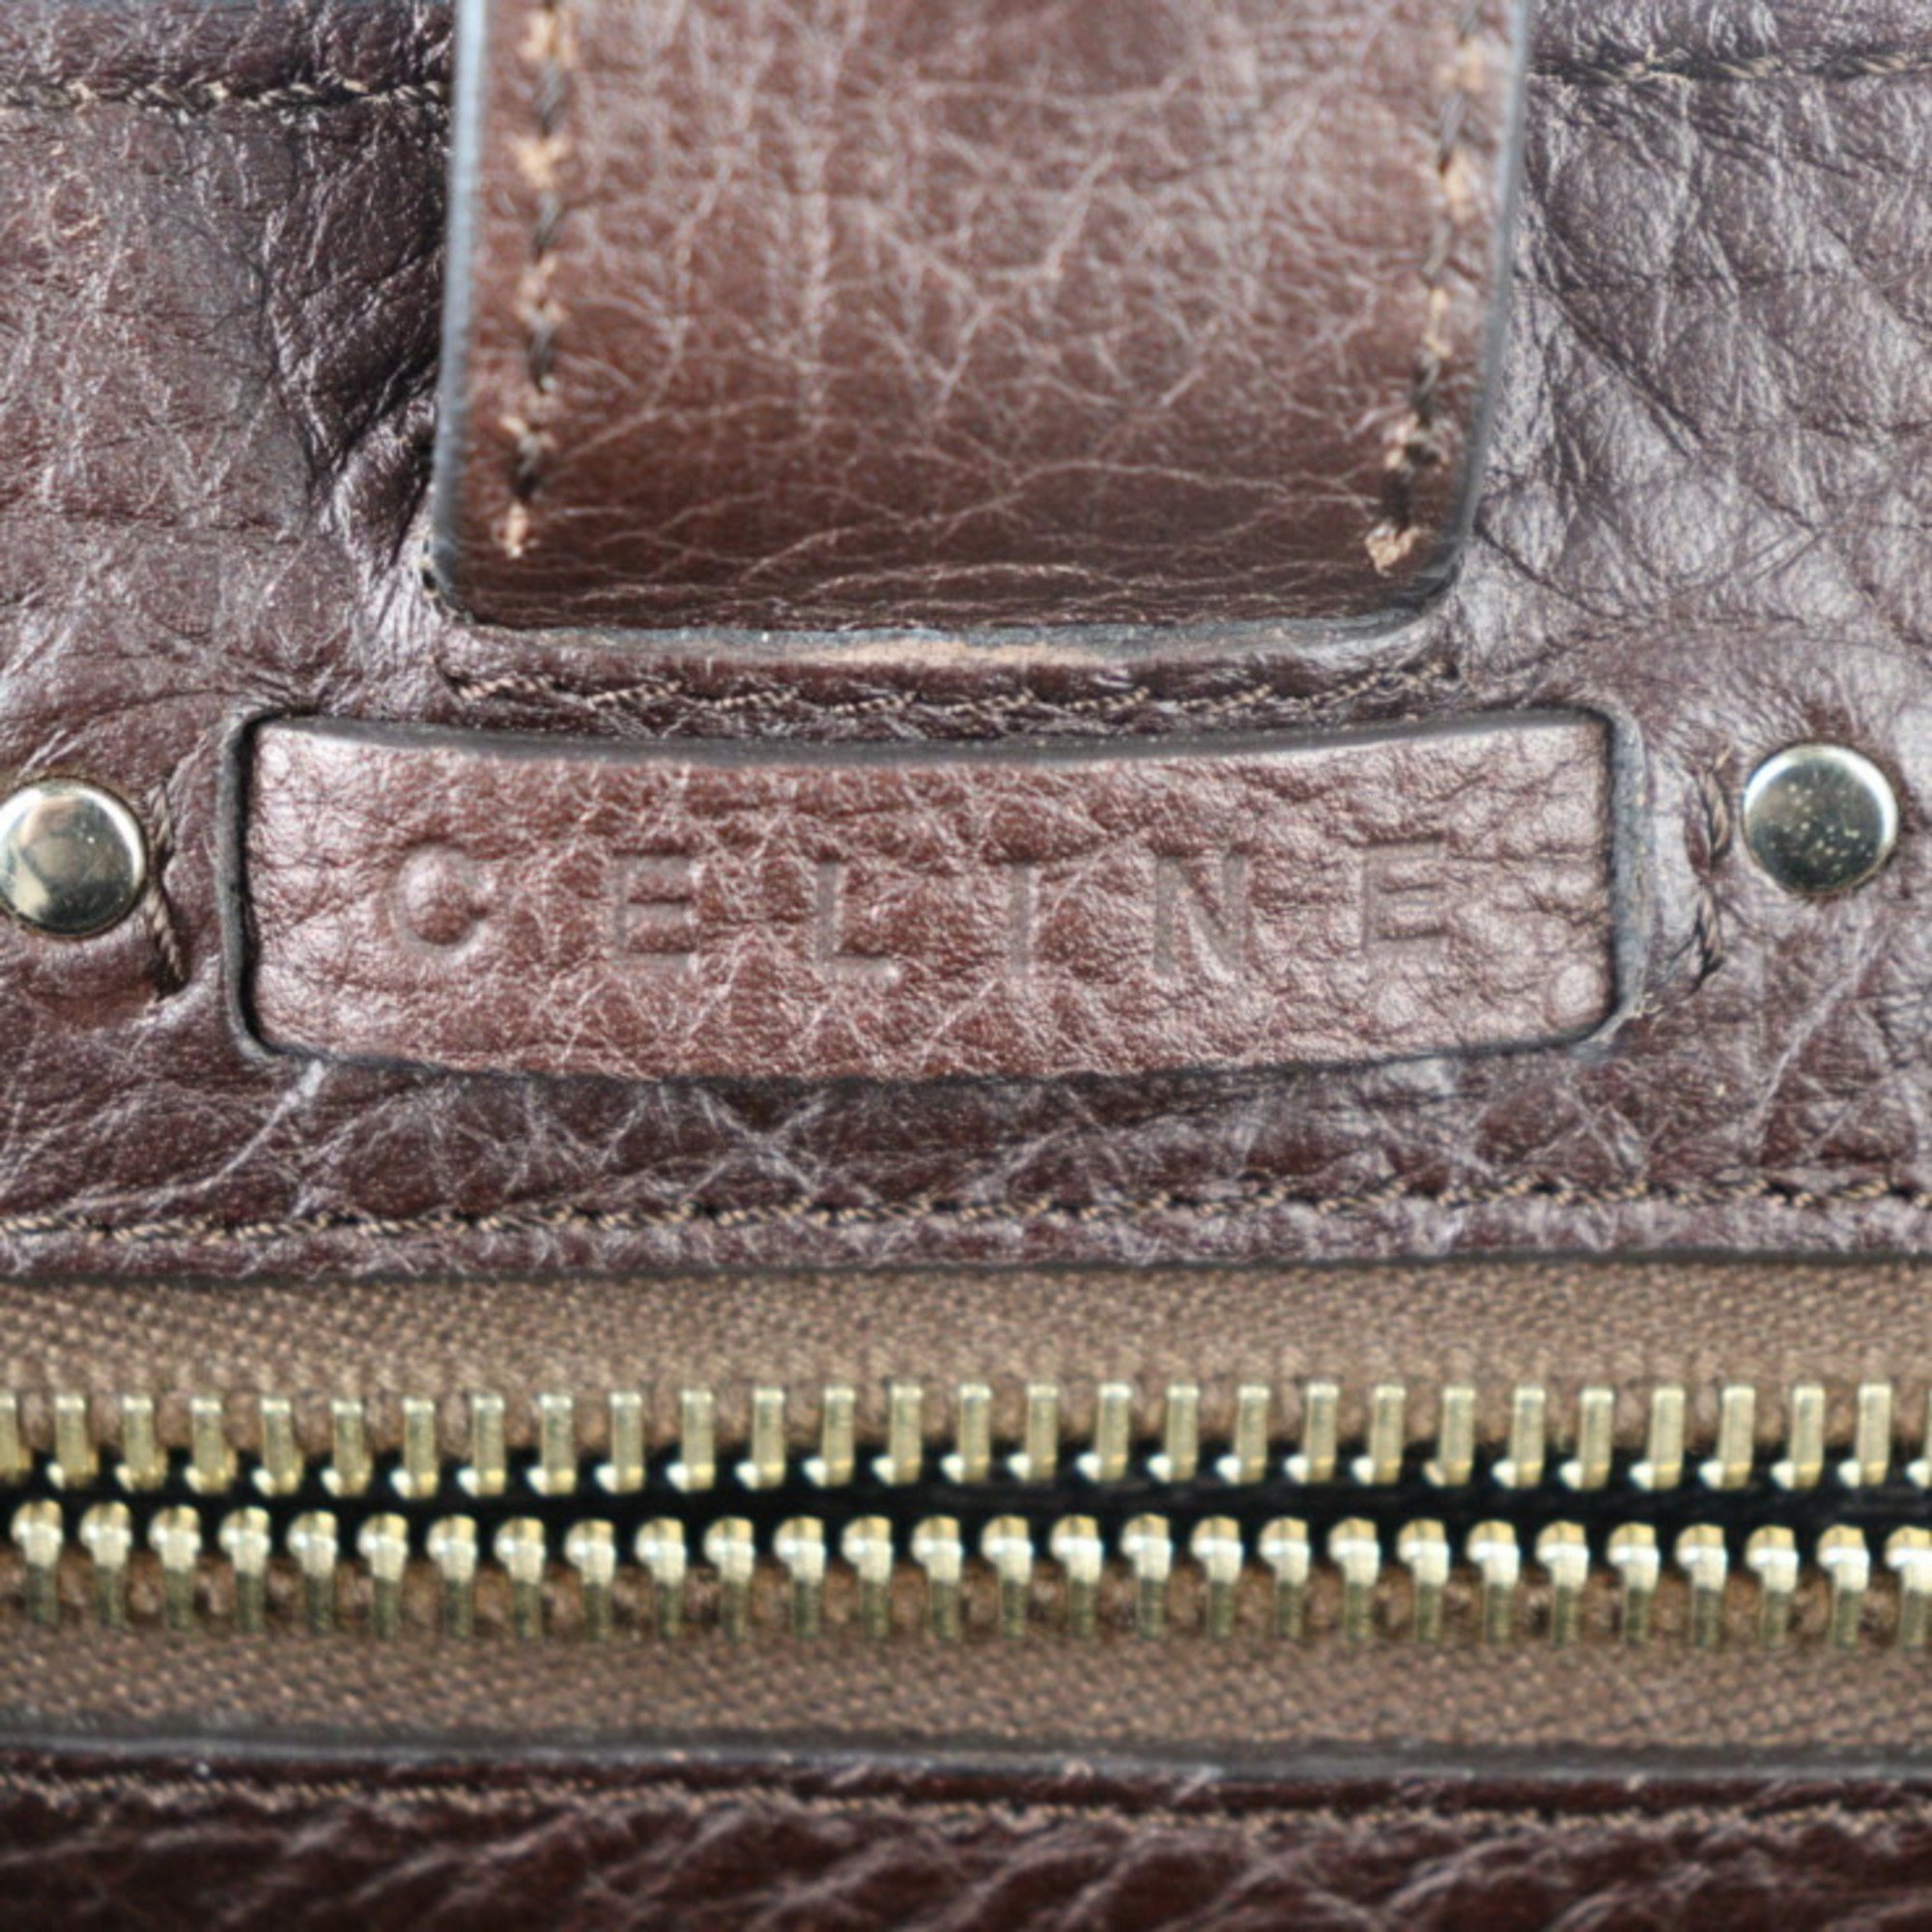 CELINE Celine handbag leather brown gold metal fittings triomphe logo mark emboss